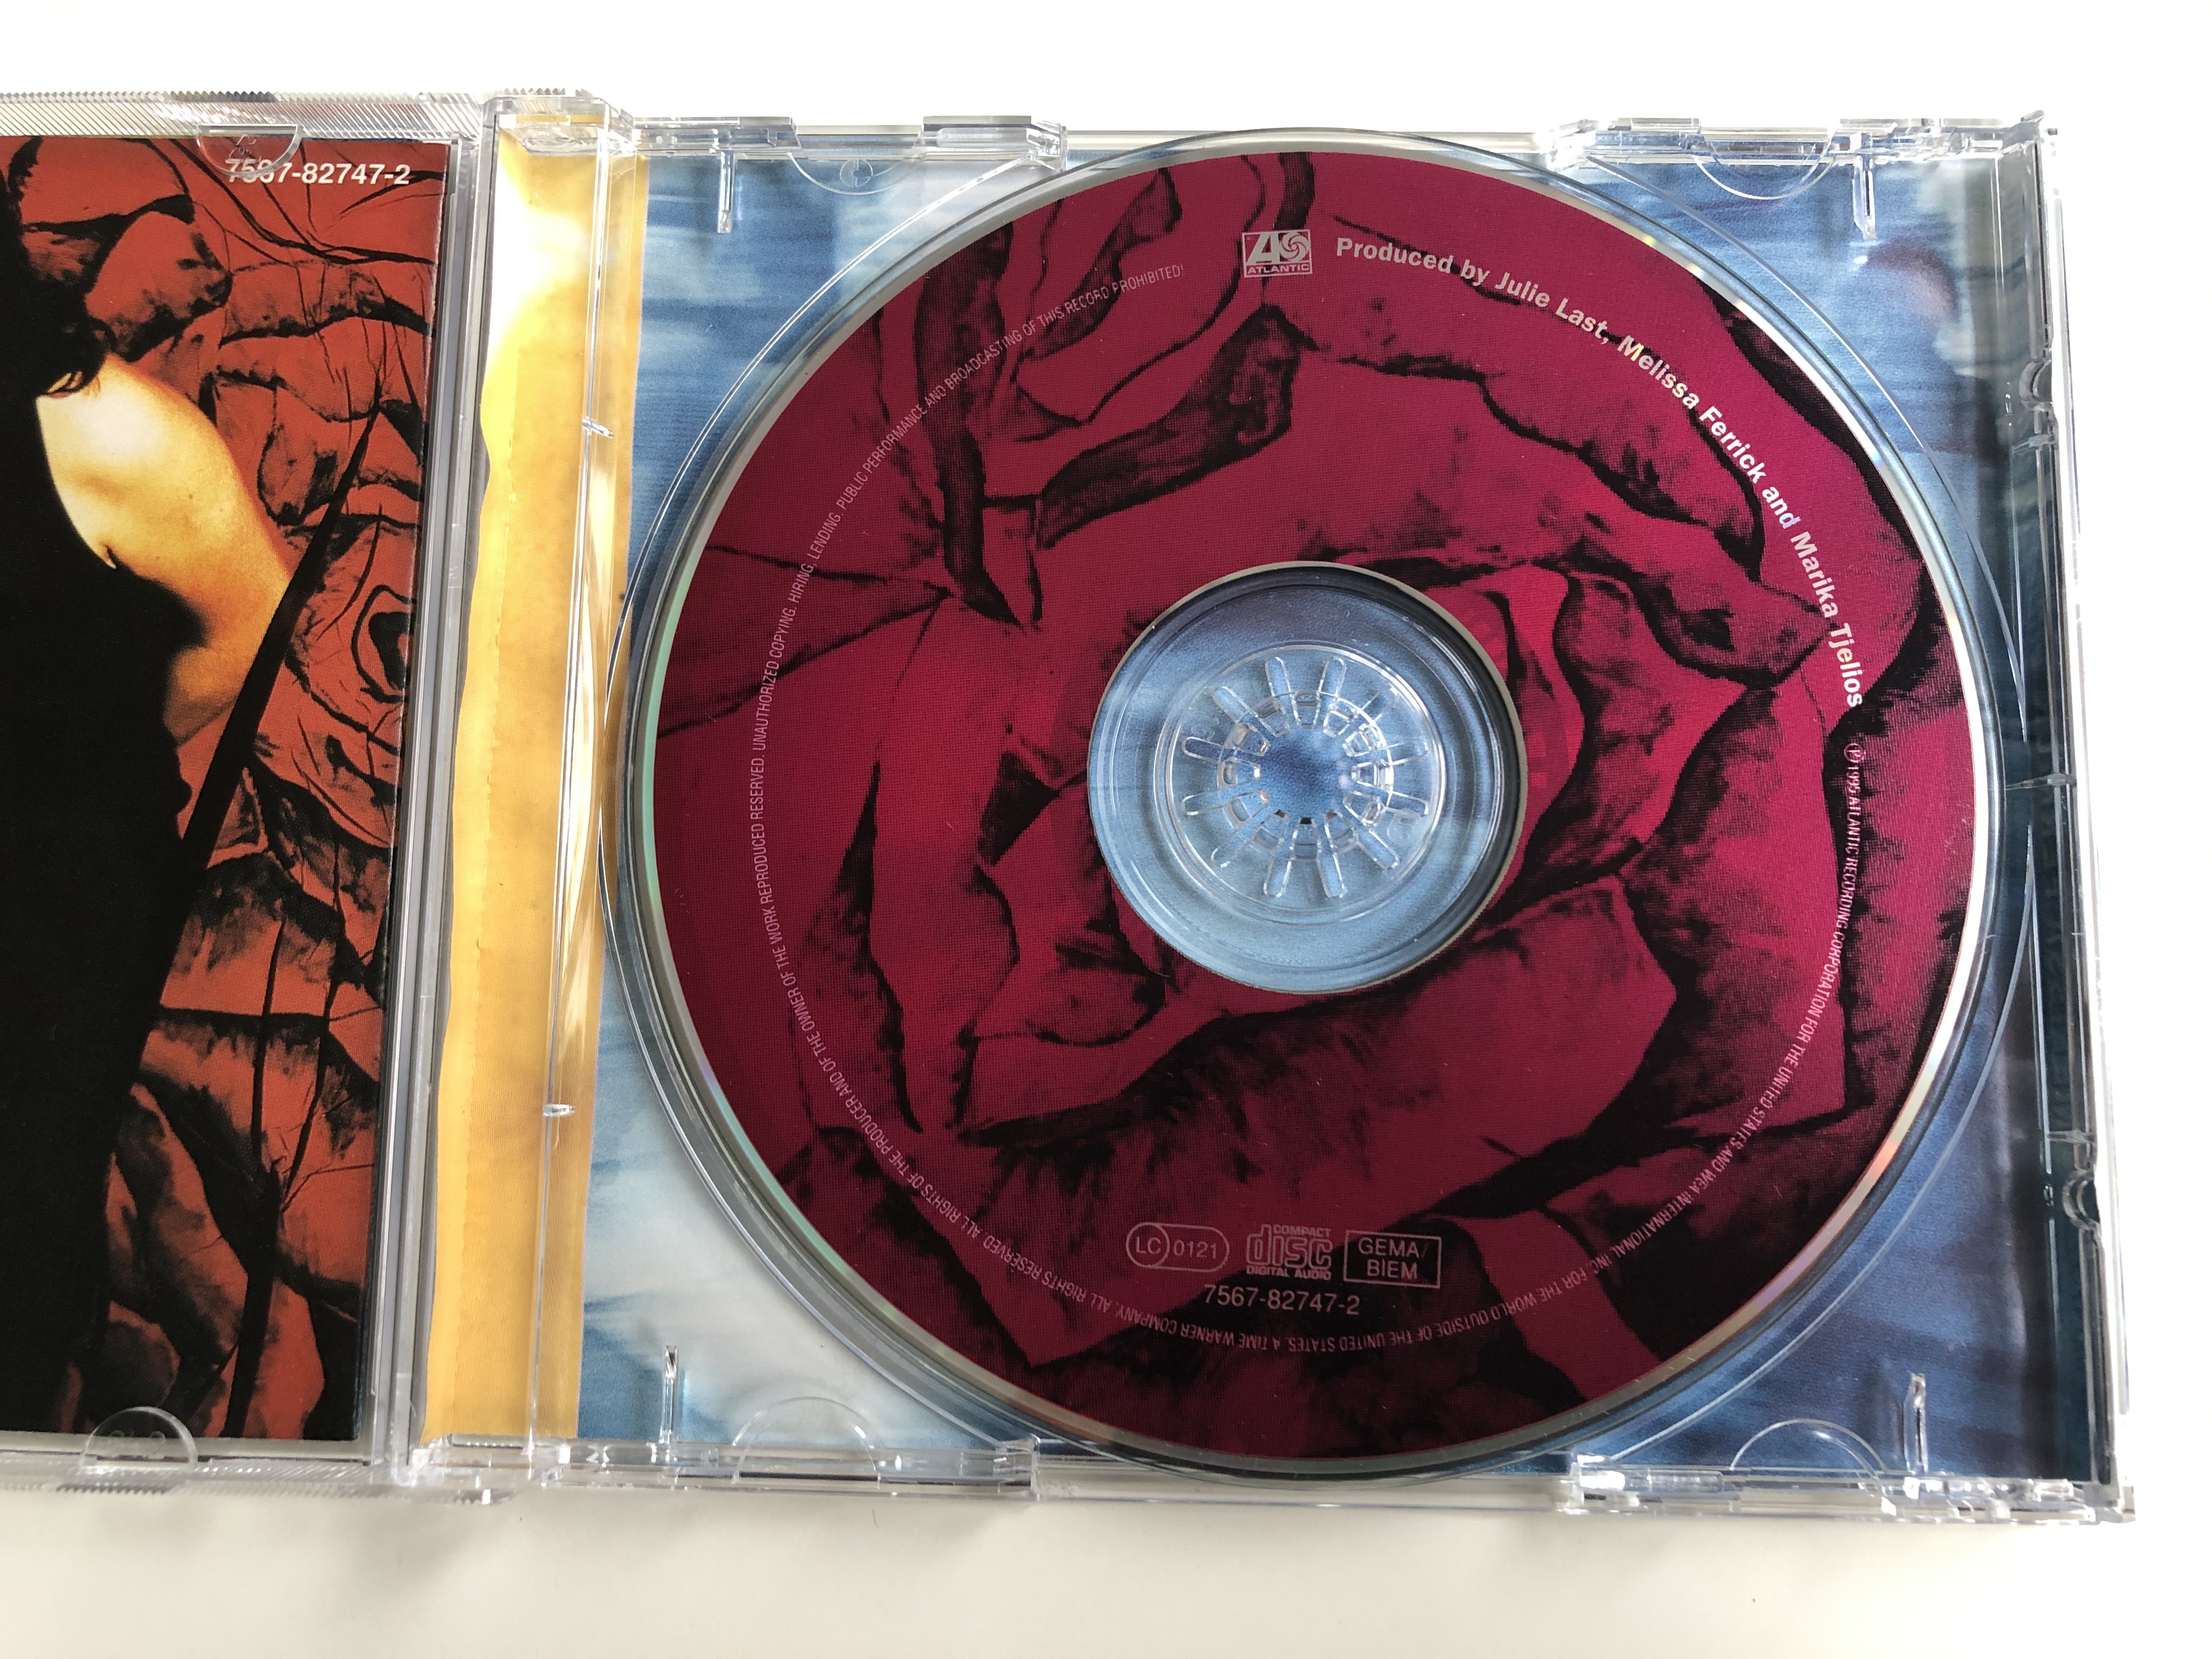 melissa-ferrick-willing-to-wait-atlantic-audio-cd-1995-7567-82747-2-3-.jpg